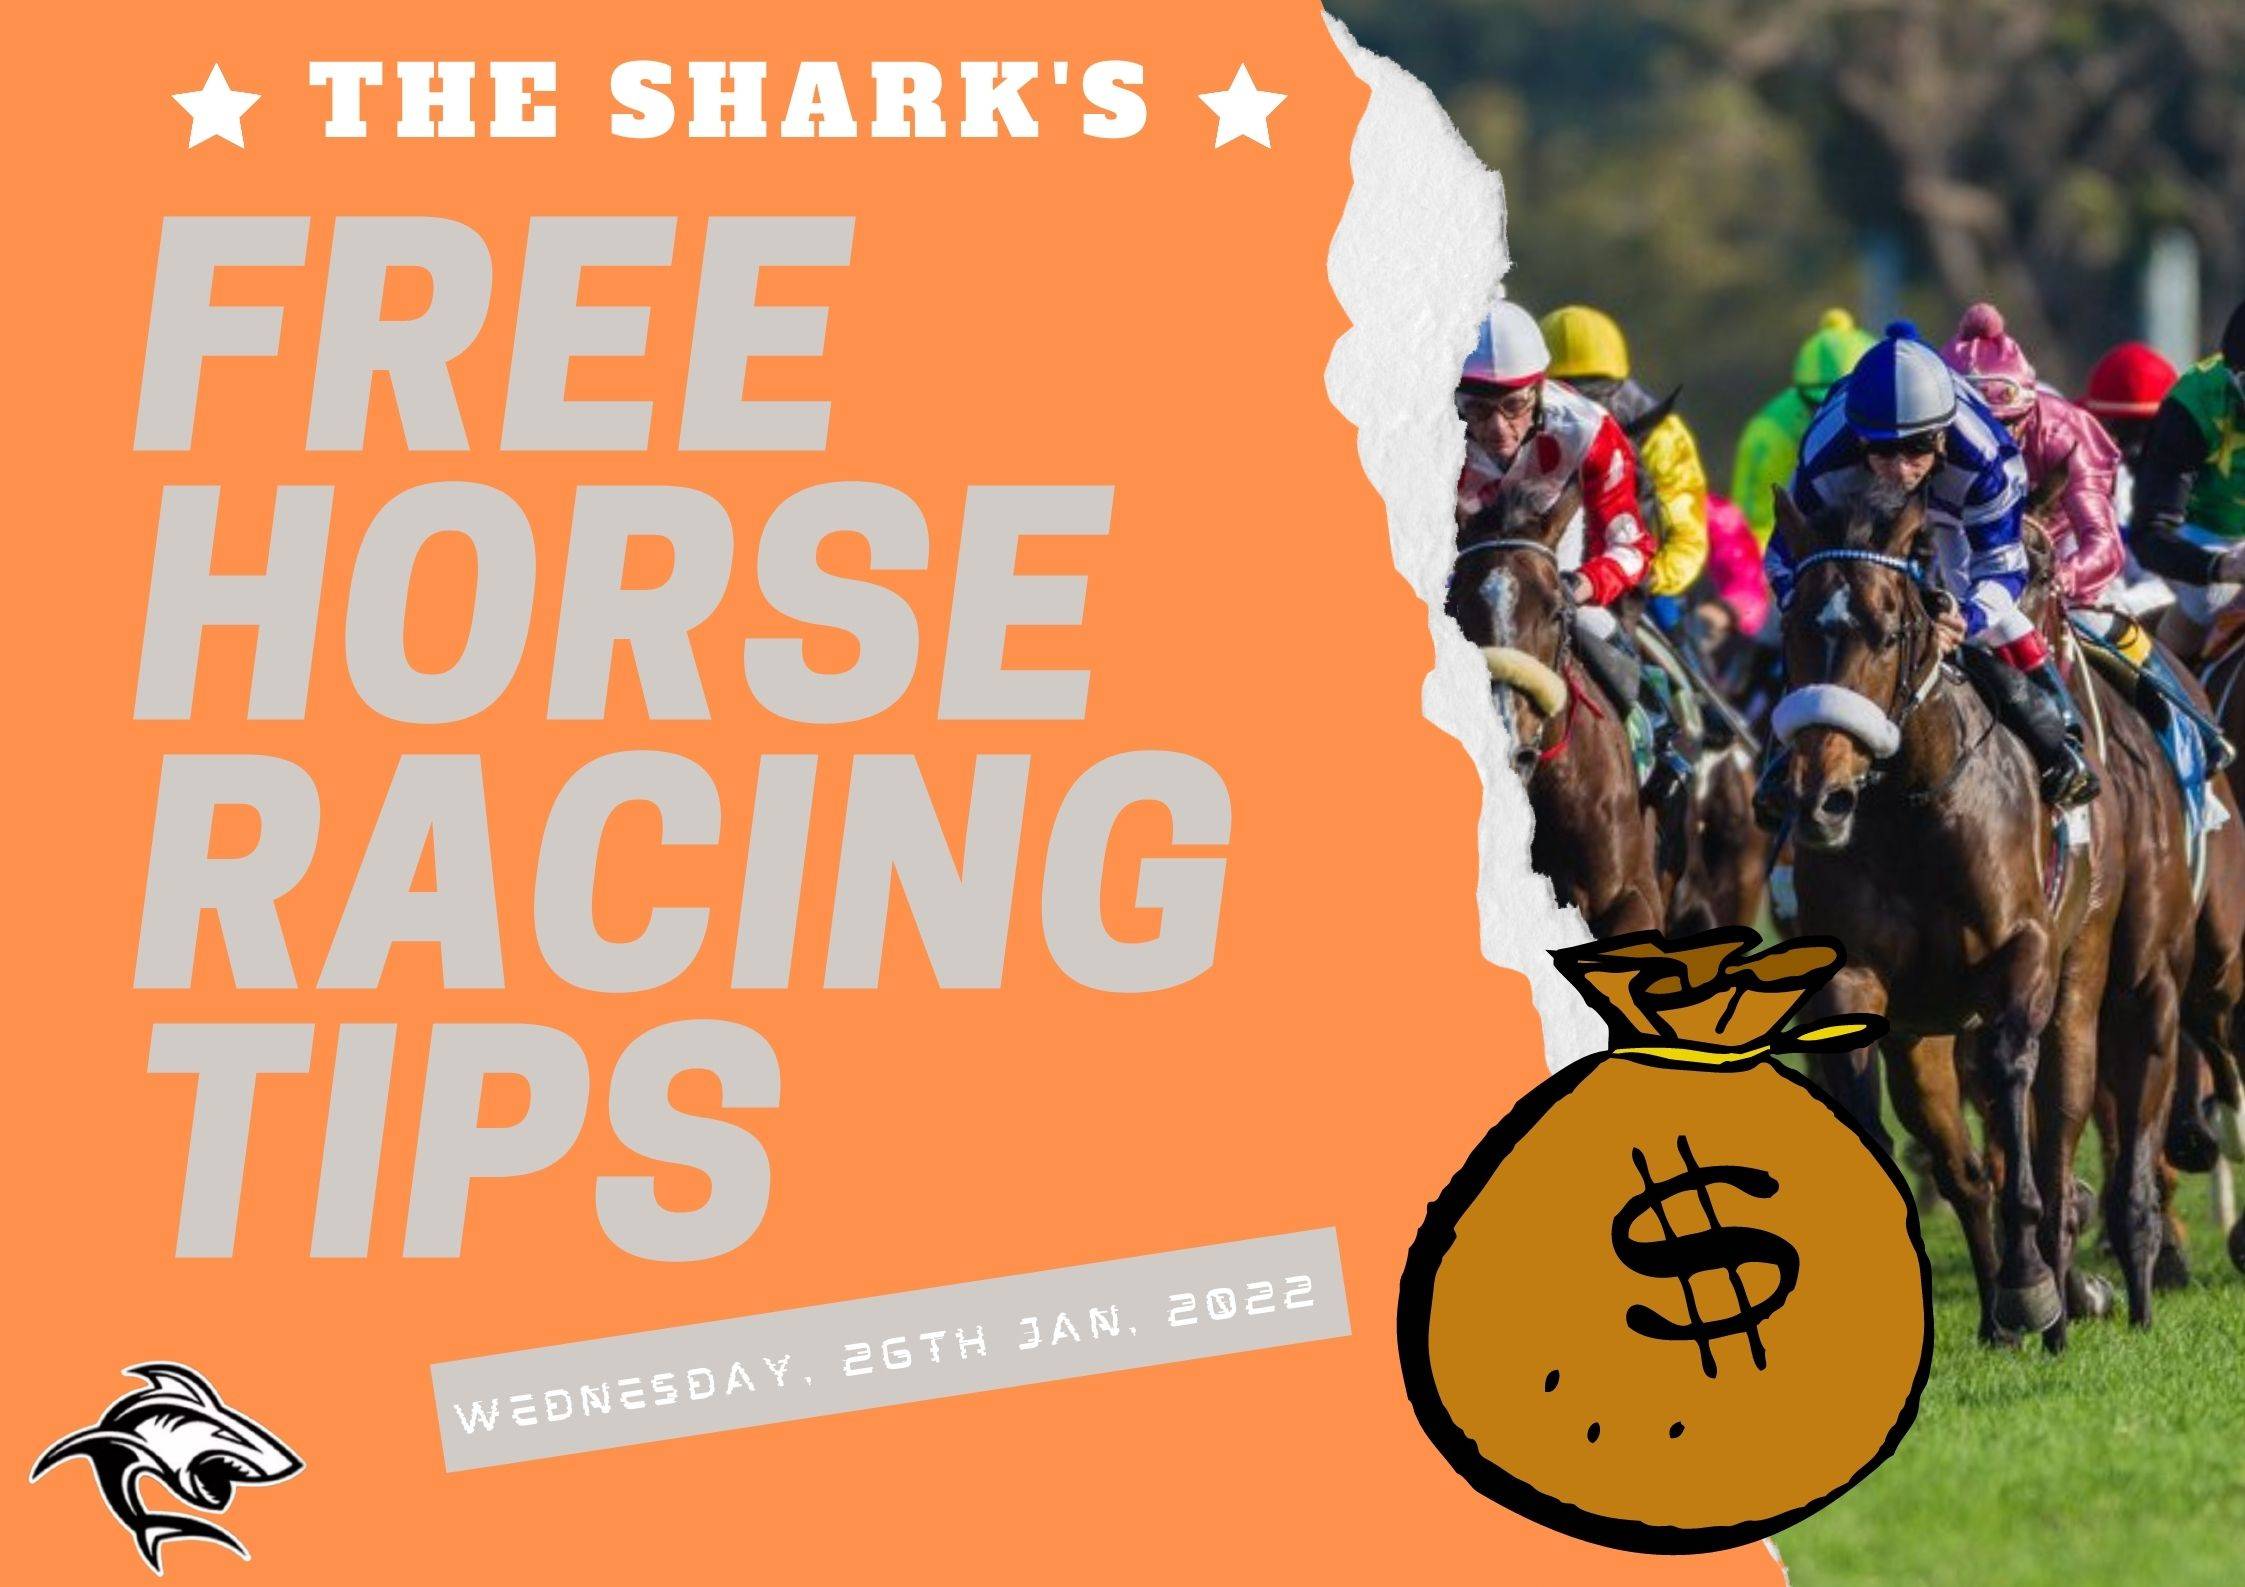 Free Horse Racing Tips - 26th Jan